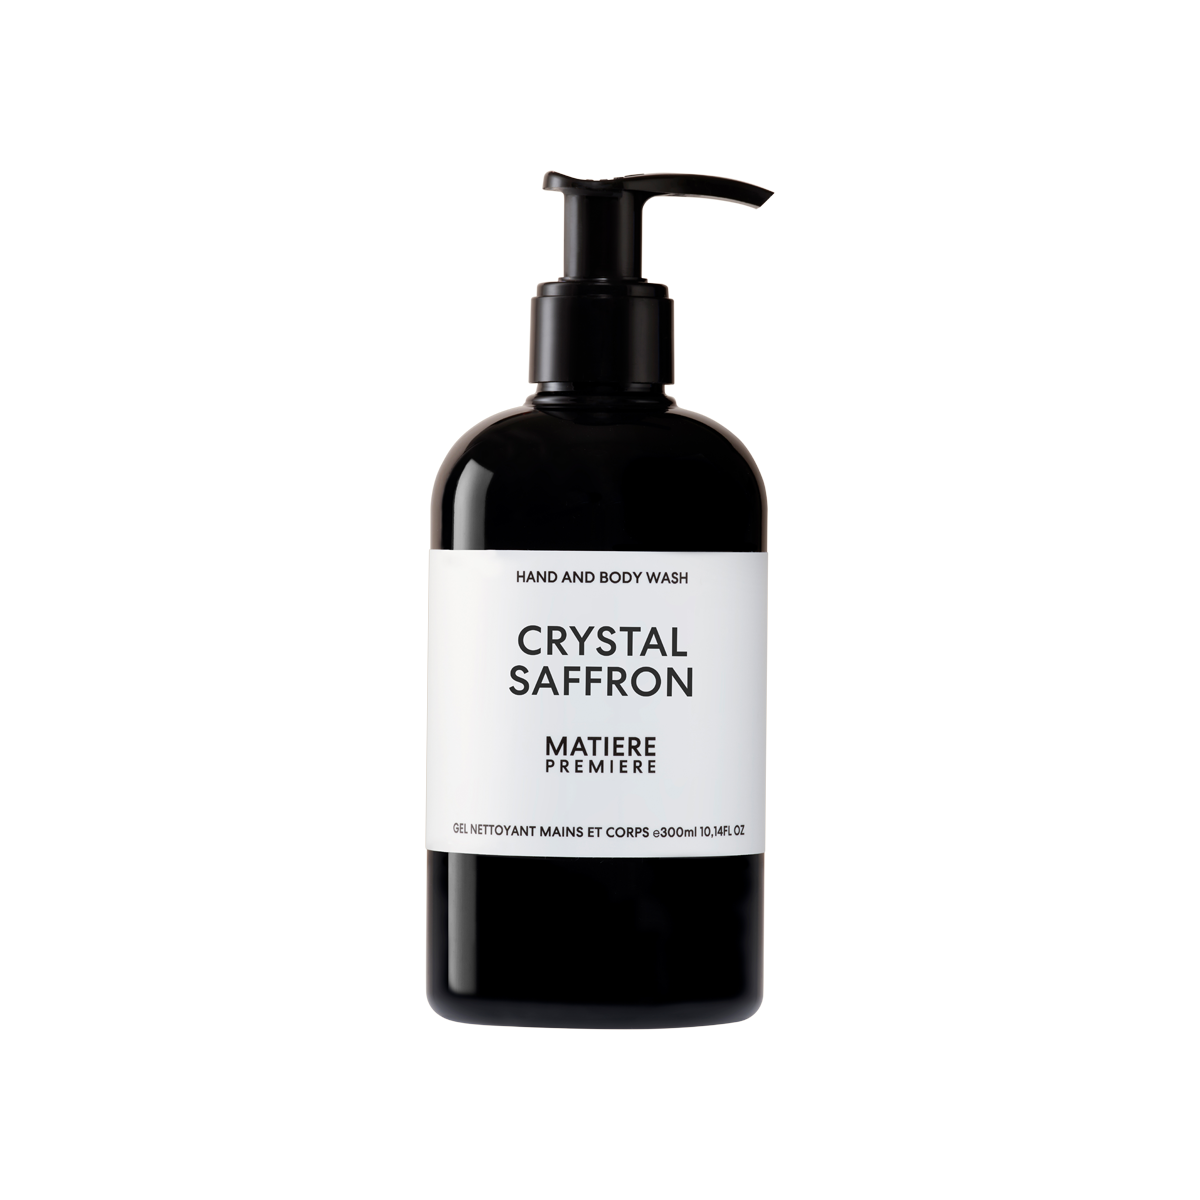 Matiere Premiere - Hand and body wash Crystal Saffron